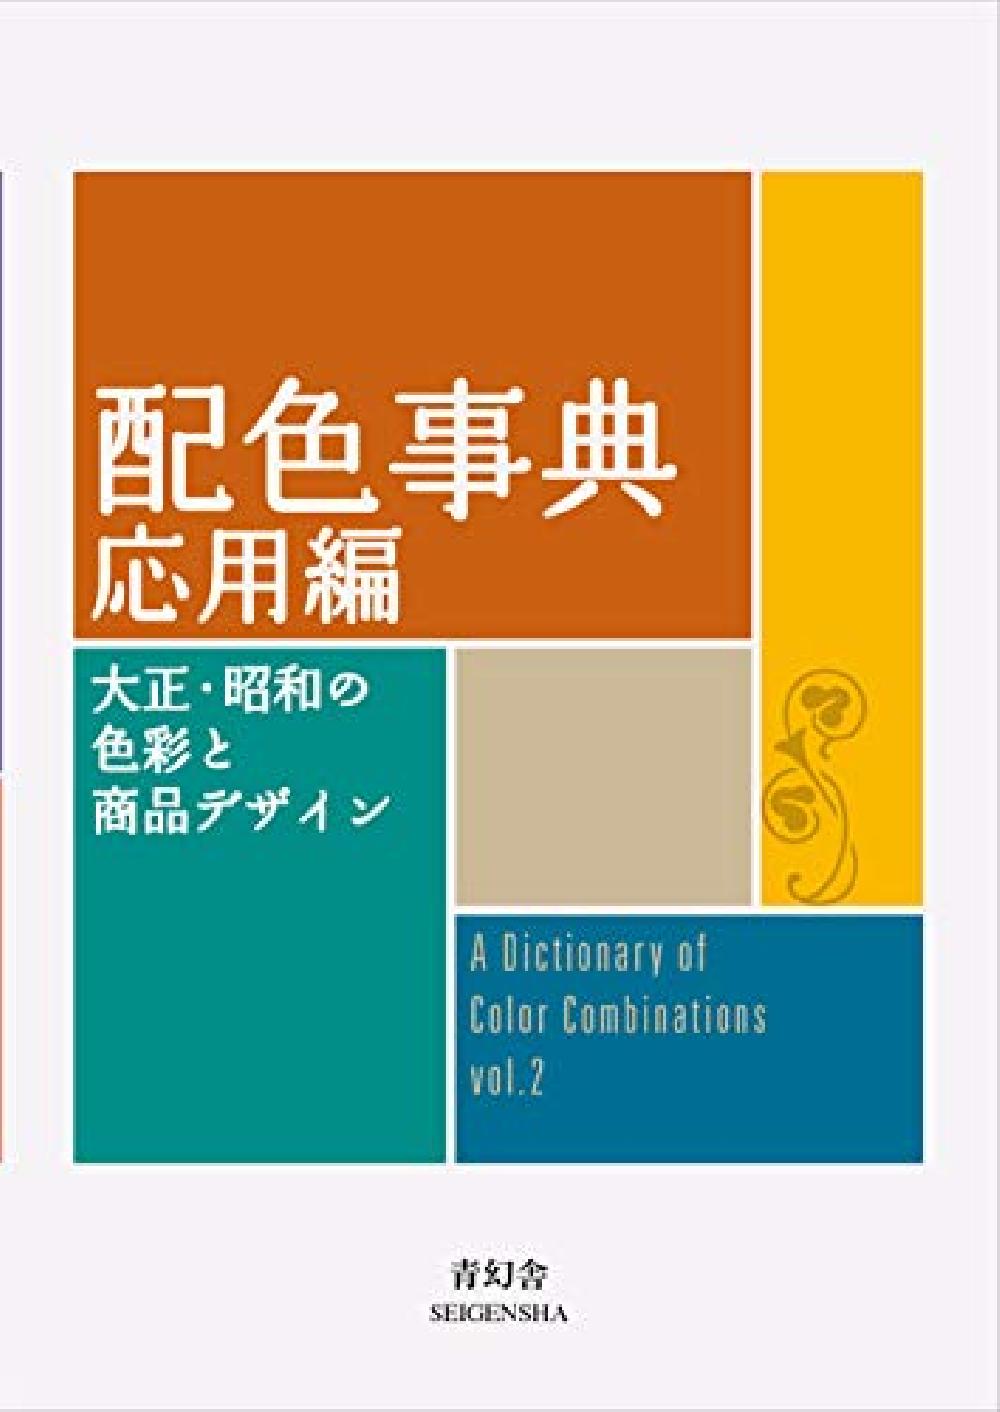 Dictionary of Color Combinations Vol 2